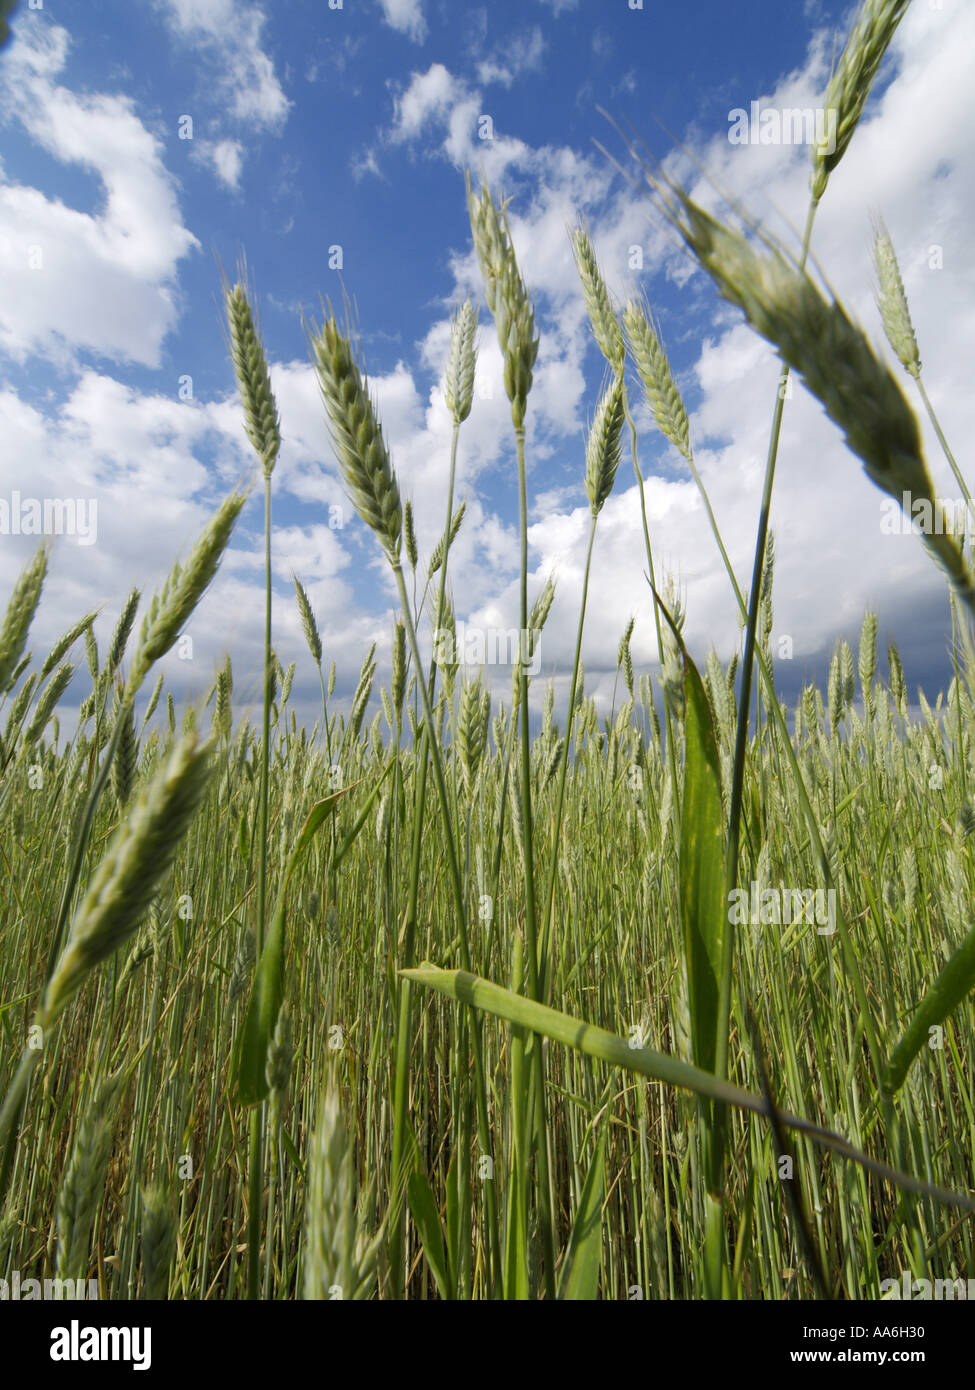 cereals, corn, field, clouded sky Stock Photo